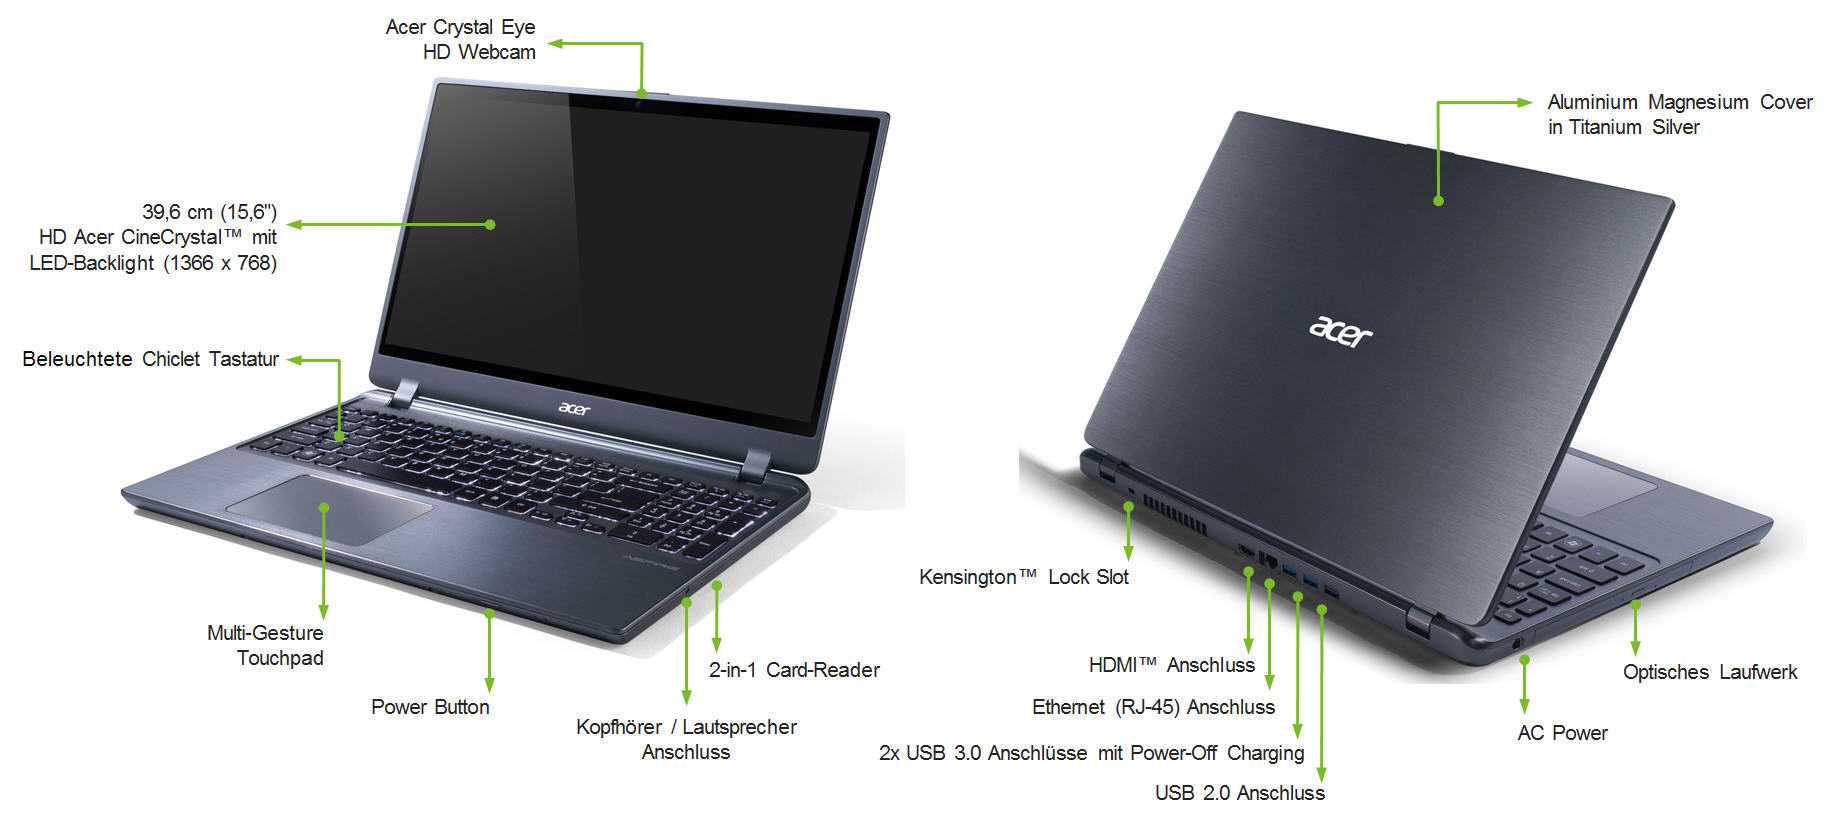 P 3 15 q 14 25. Acer Aspire n15q1. Acer Aspire m5630. Технические данные Acer Aspire ноутбук. Размер ноутбука Acer Aspire.